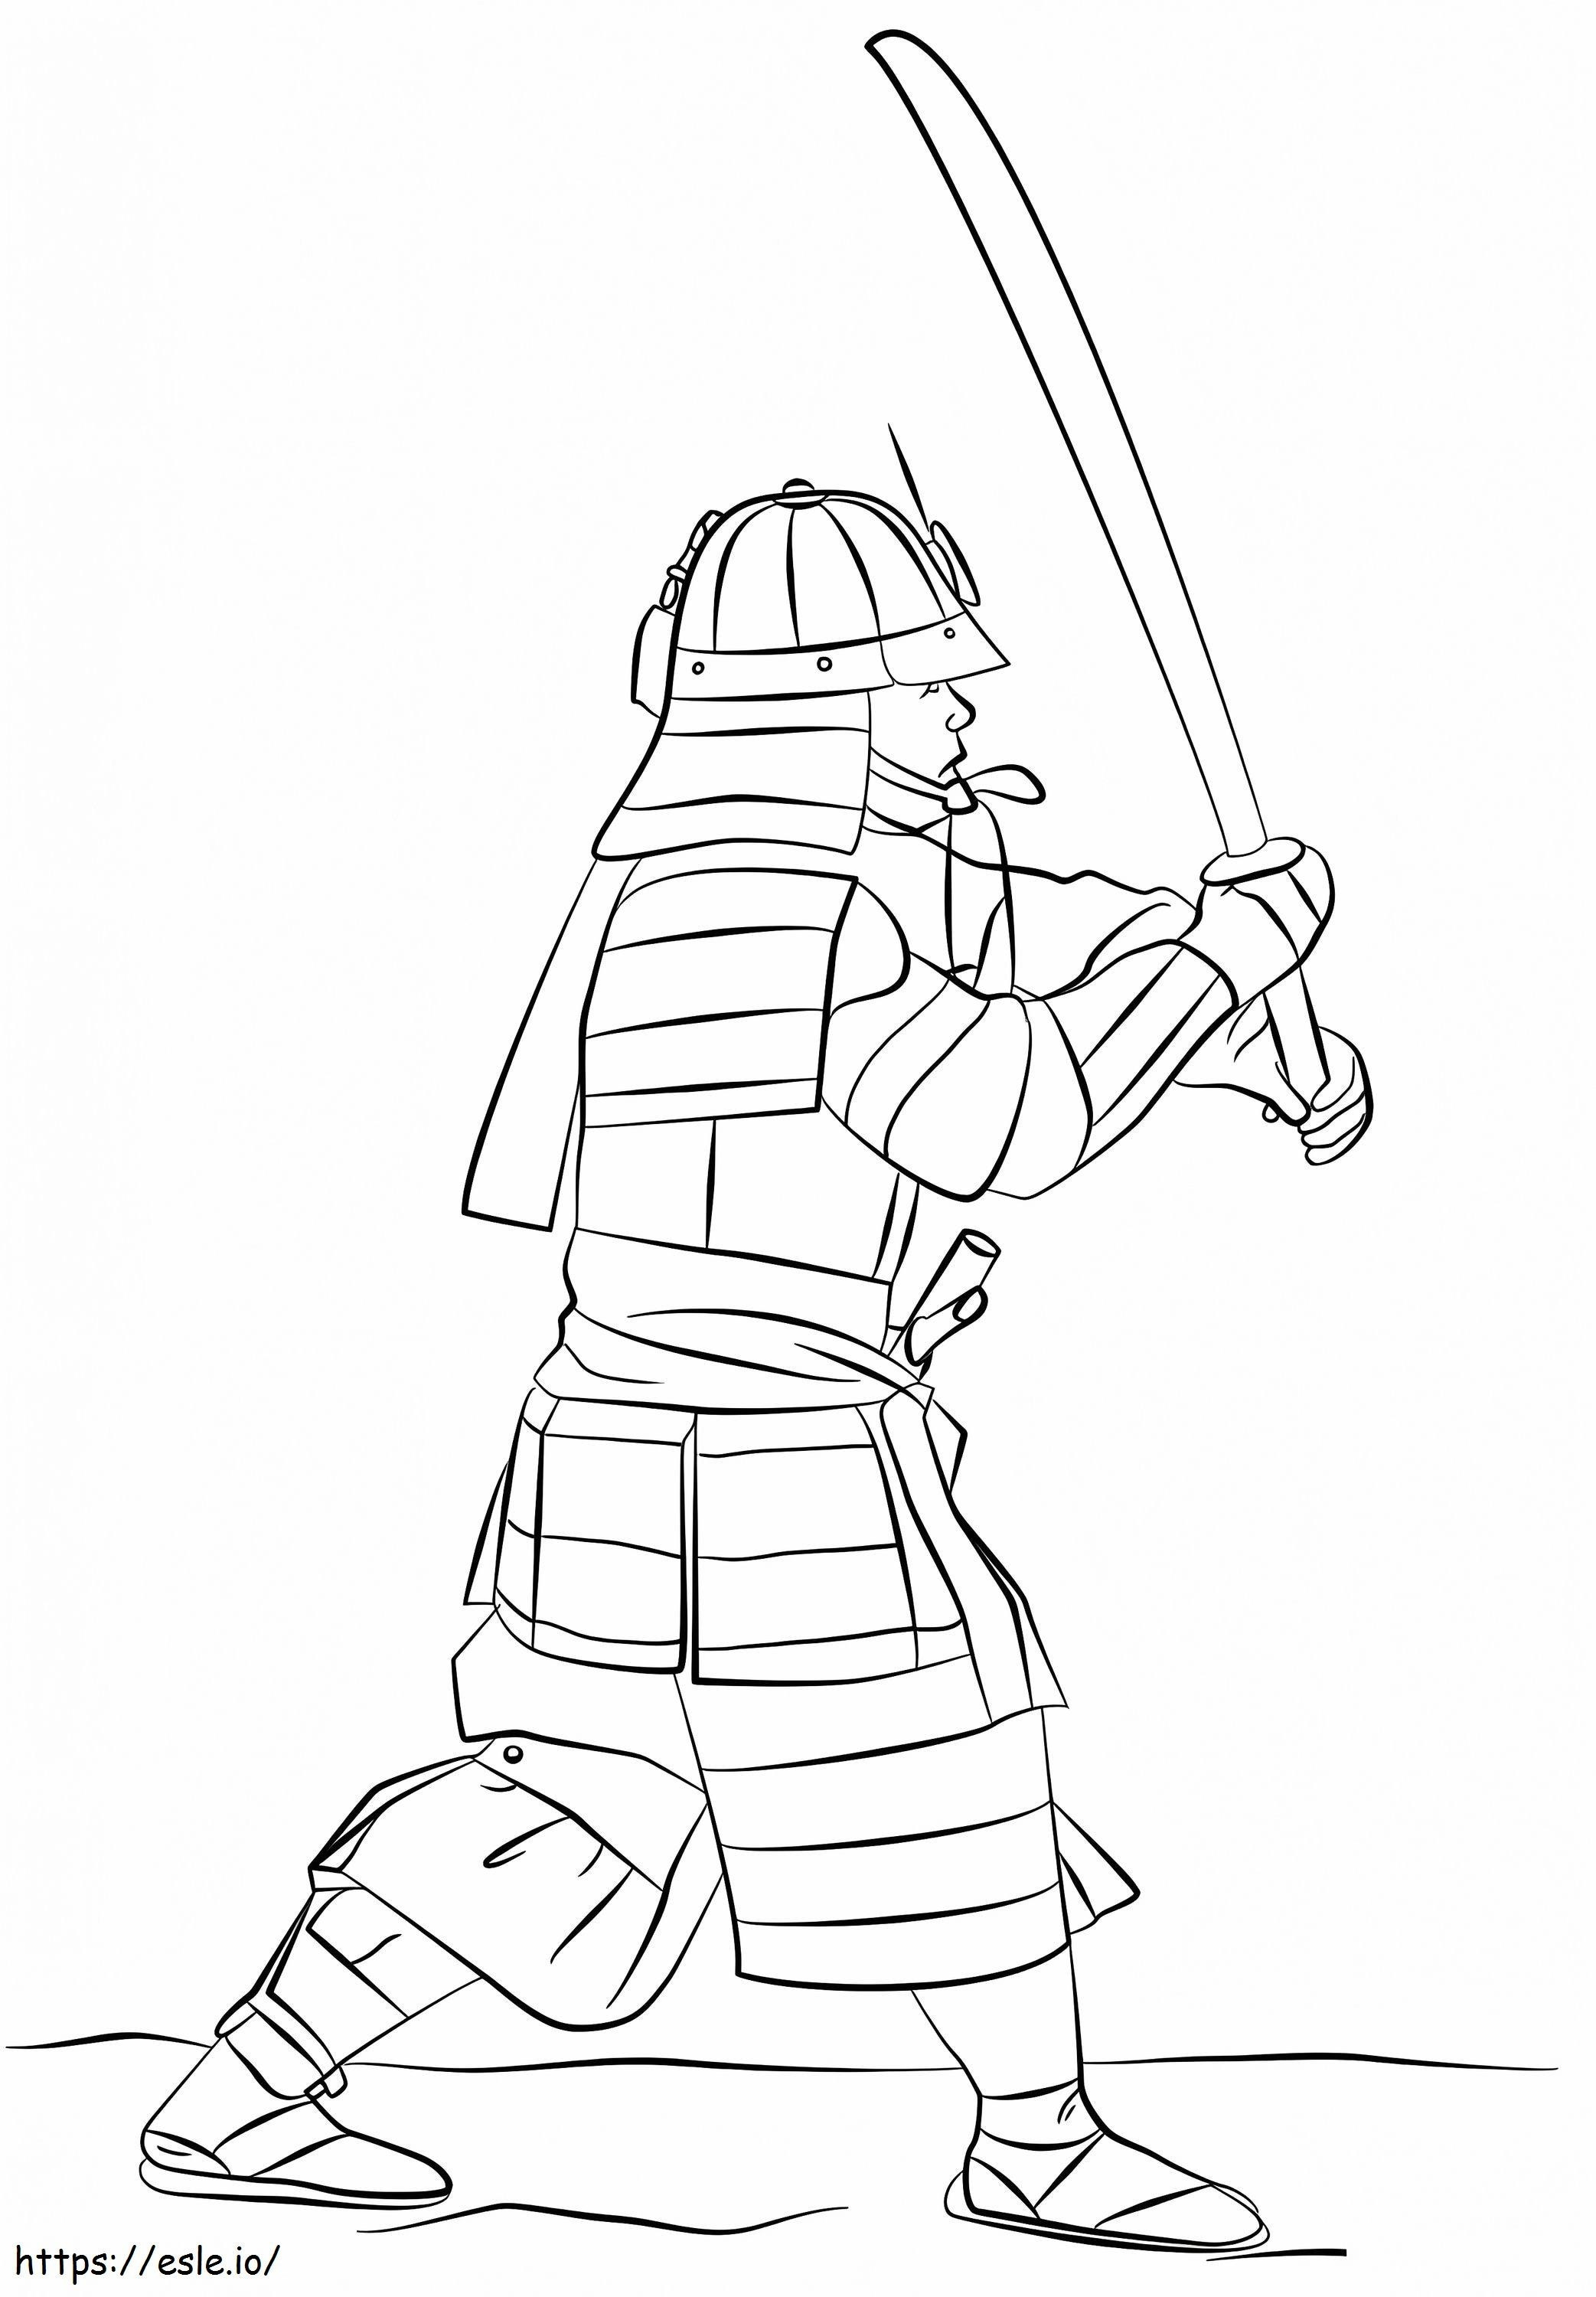 Armored Samurai coloring page